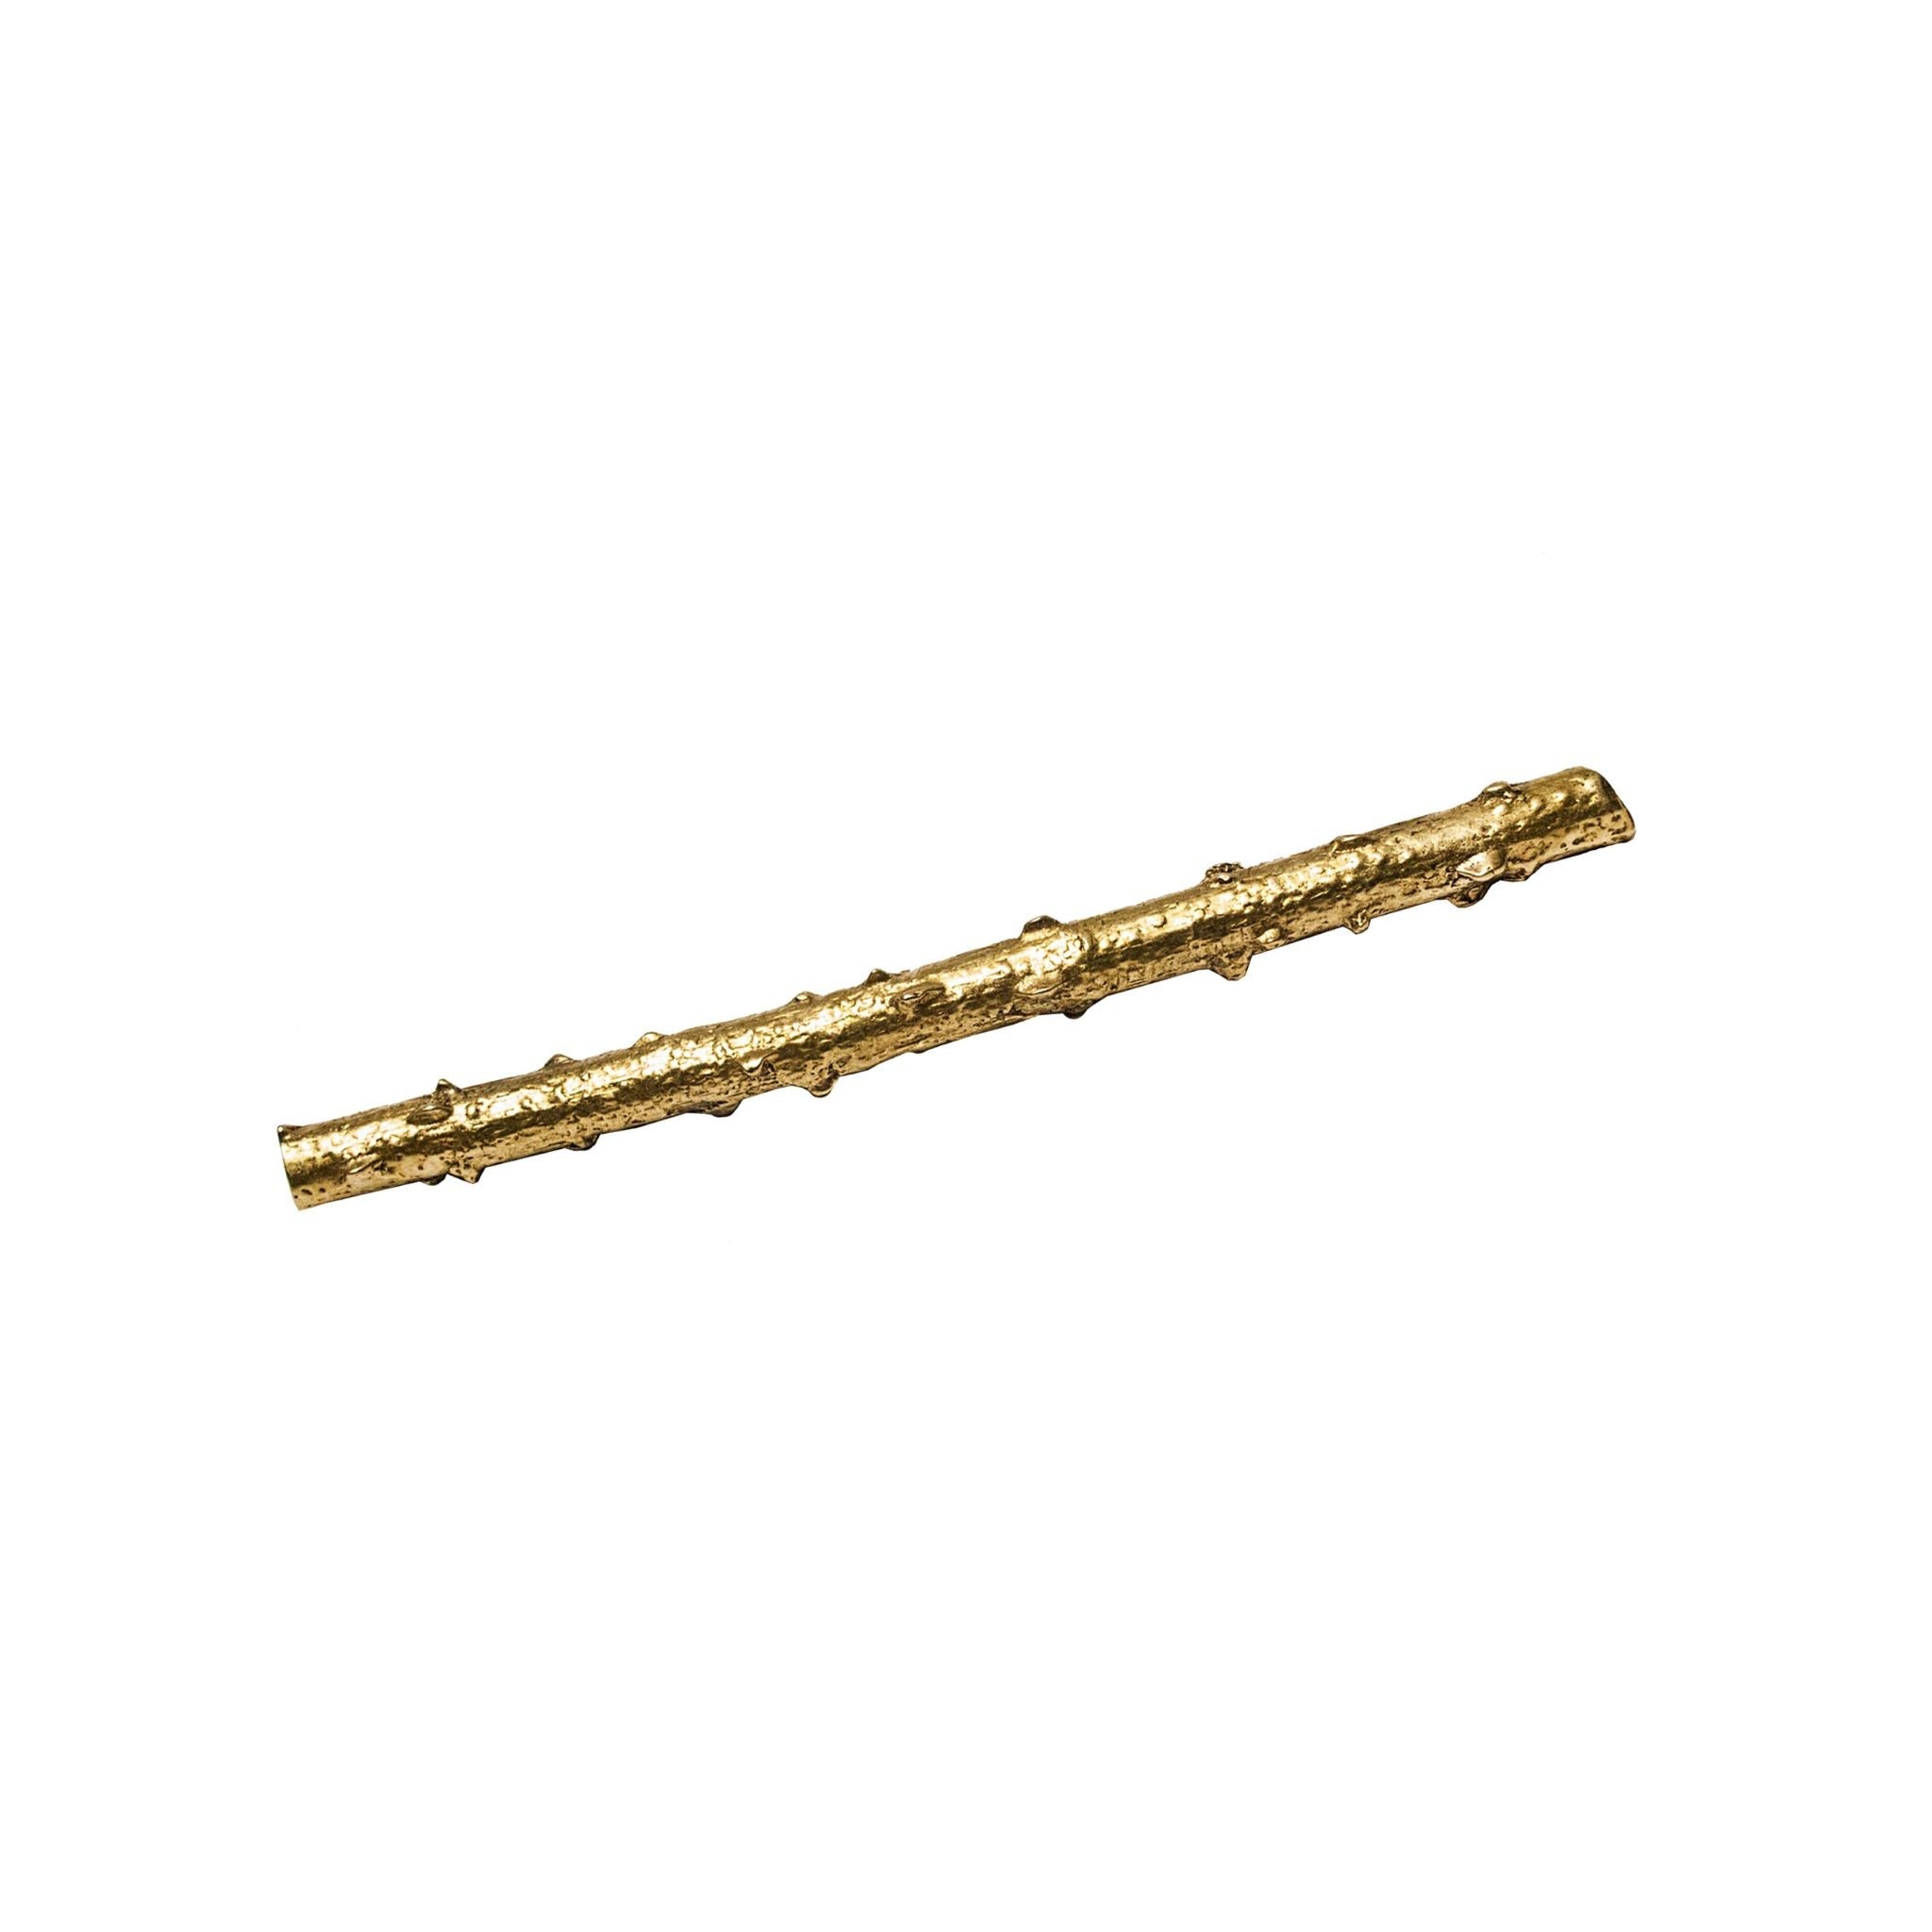 Chalet brass large rosehip branch knob - ilbronzetto